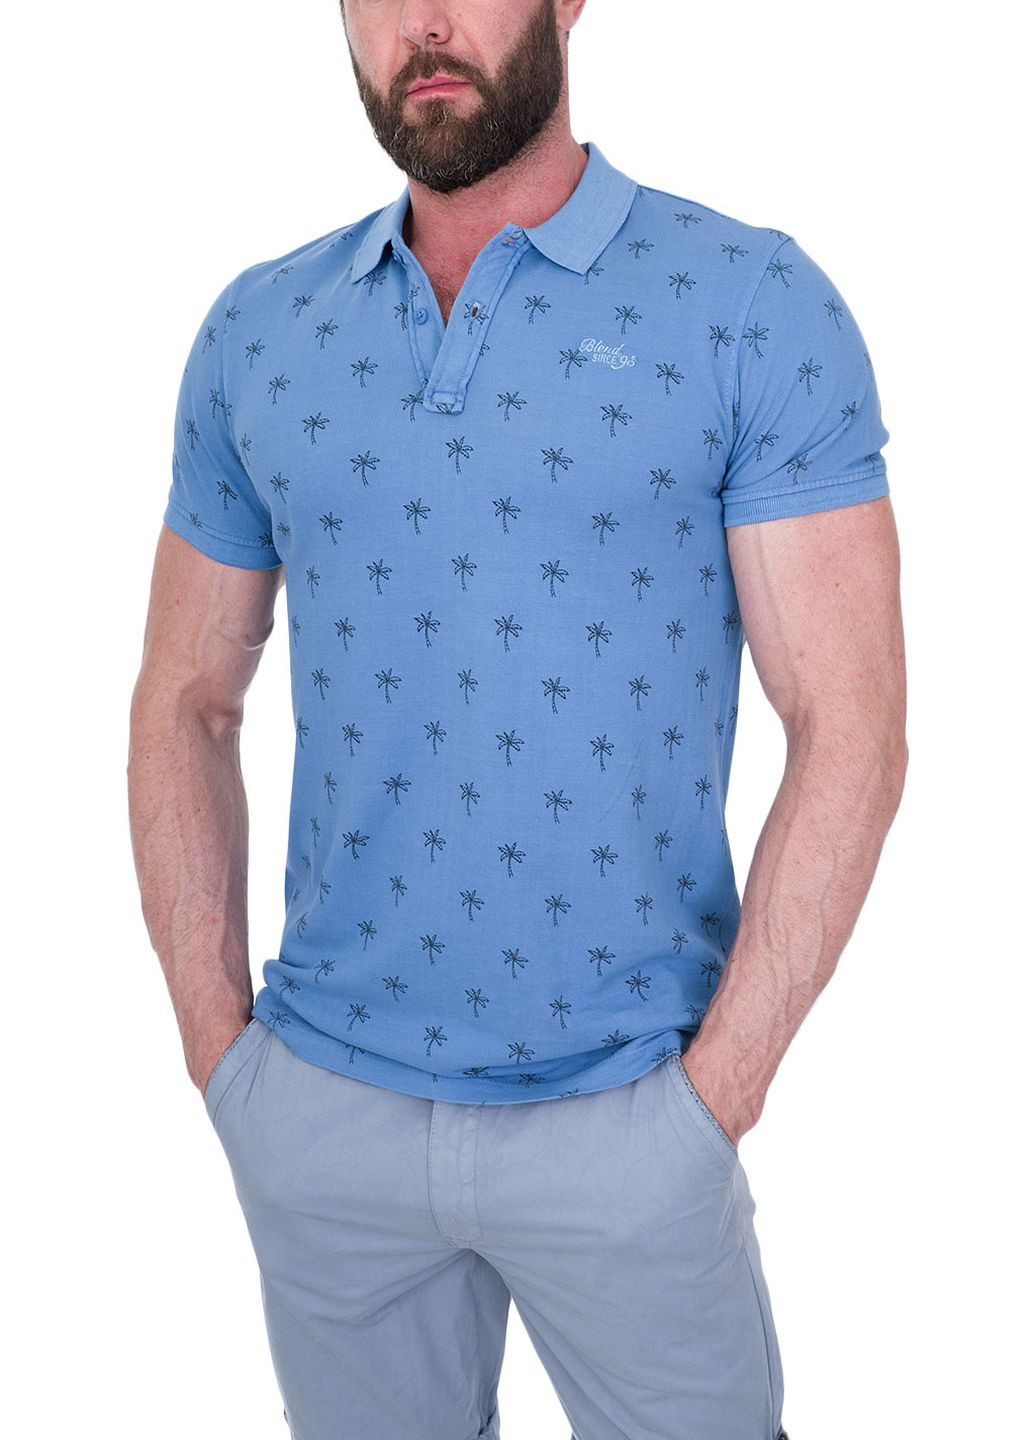 Синяя футболка-поло для мужчин Blend